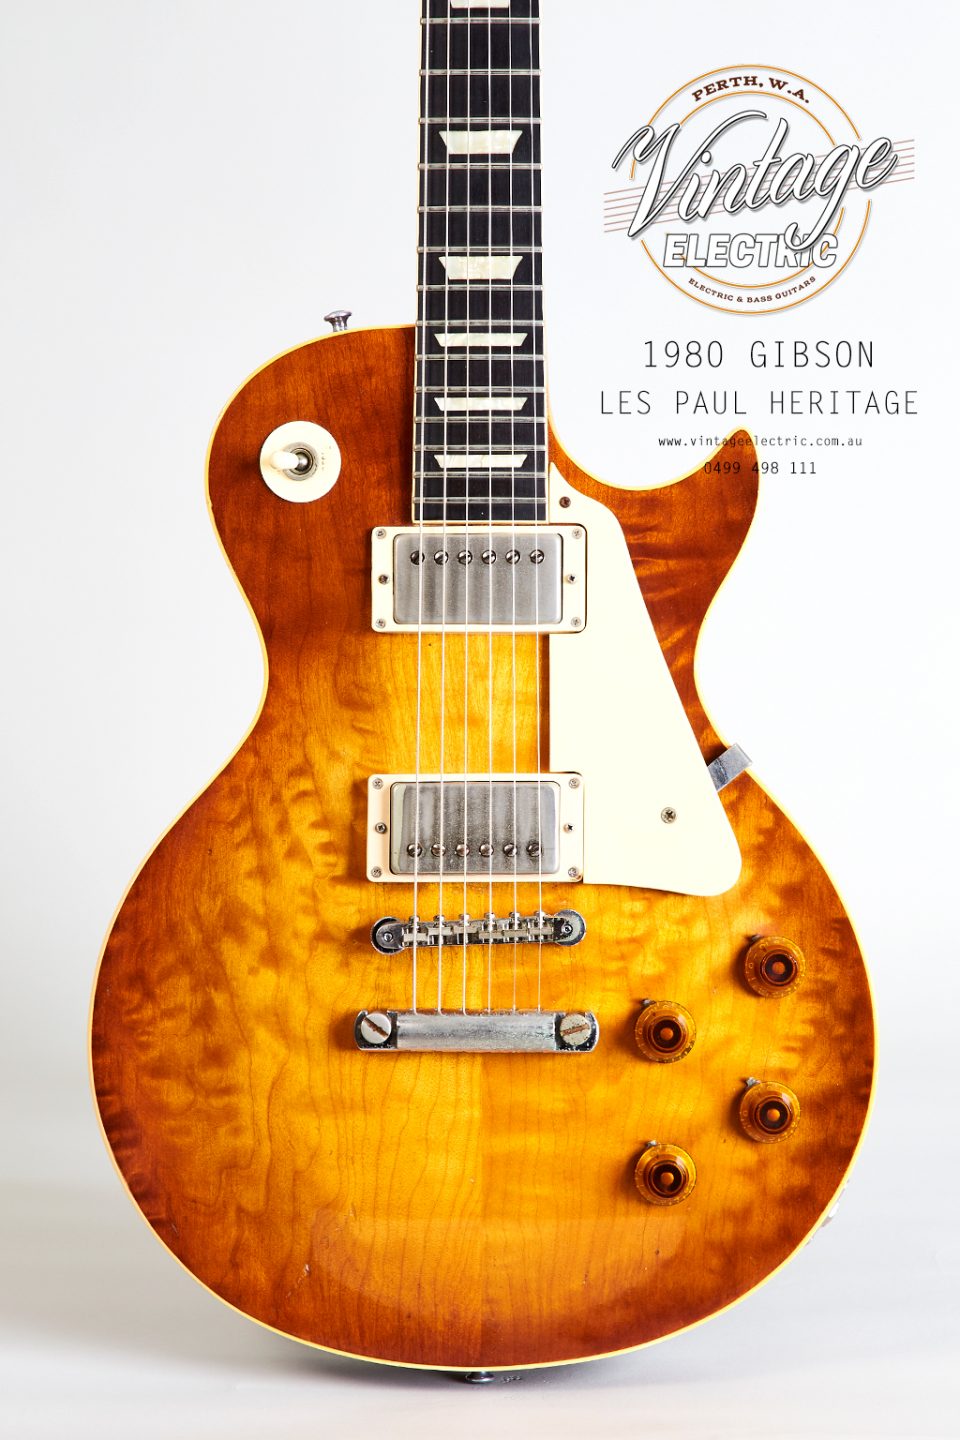 1980 Gibson Les Paul Heritage Elite Body